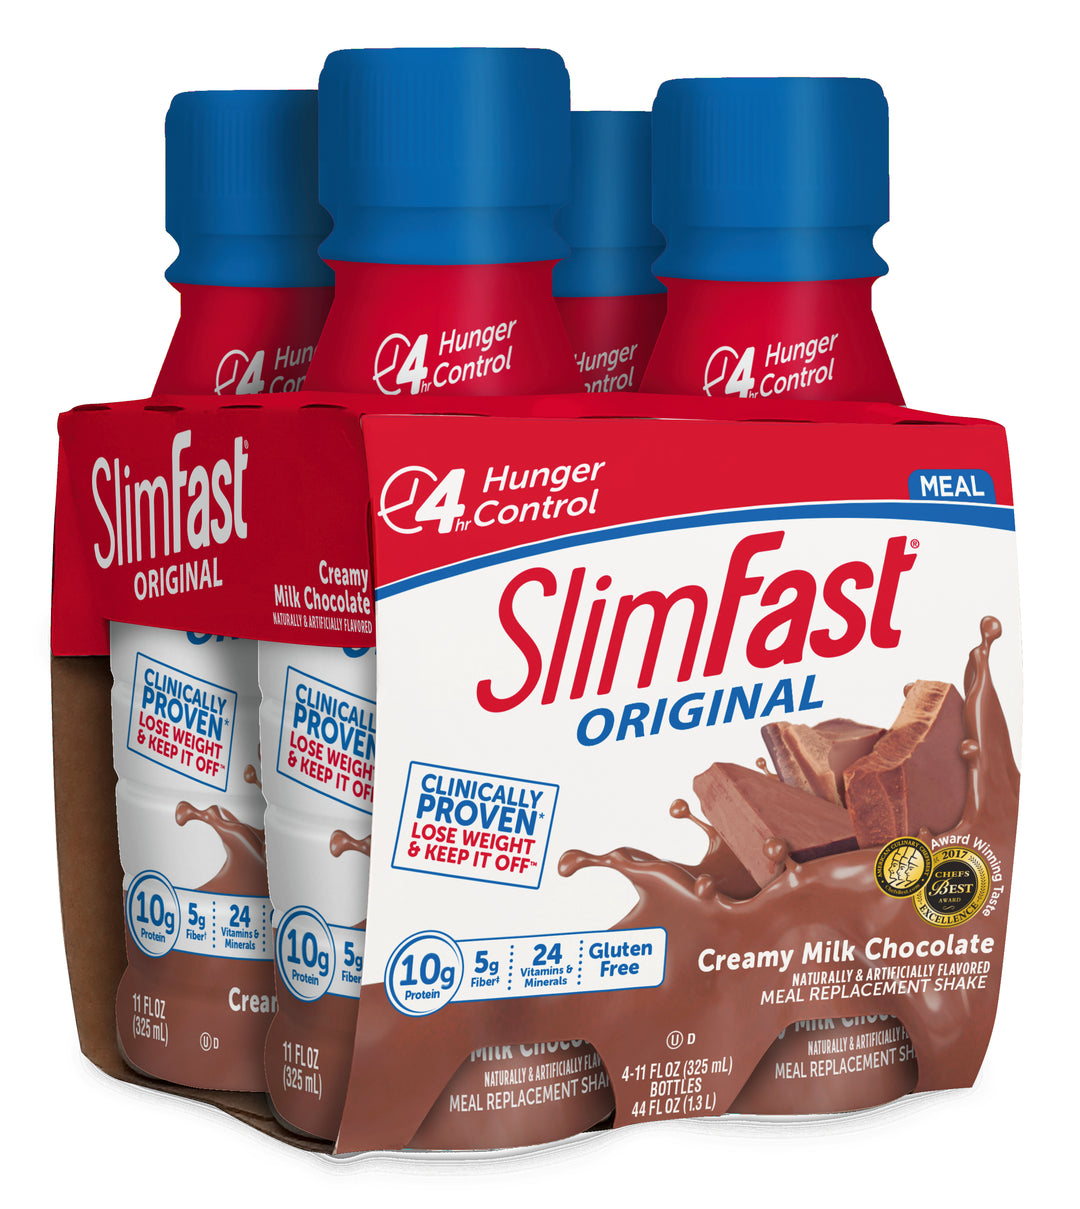 Slimfast Ready To Drink Original Creamy Milk Chocolate Shake-11 fl oz.s-4/Box-3/Case